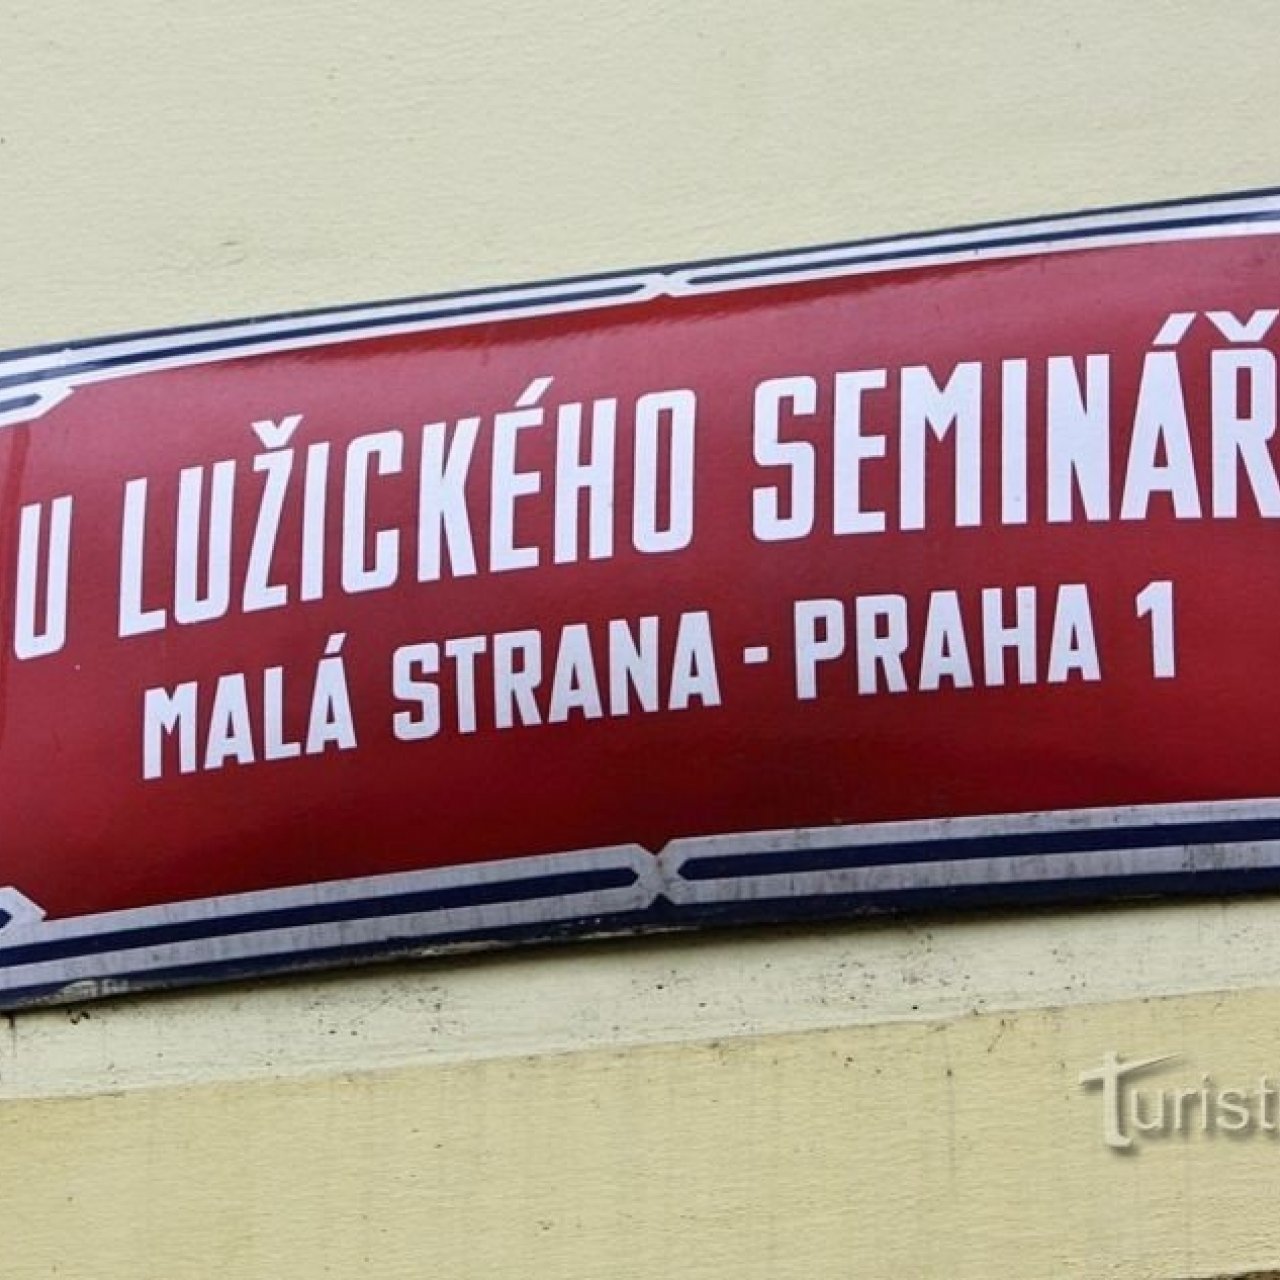 Praha - U Lužického semináře